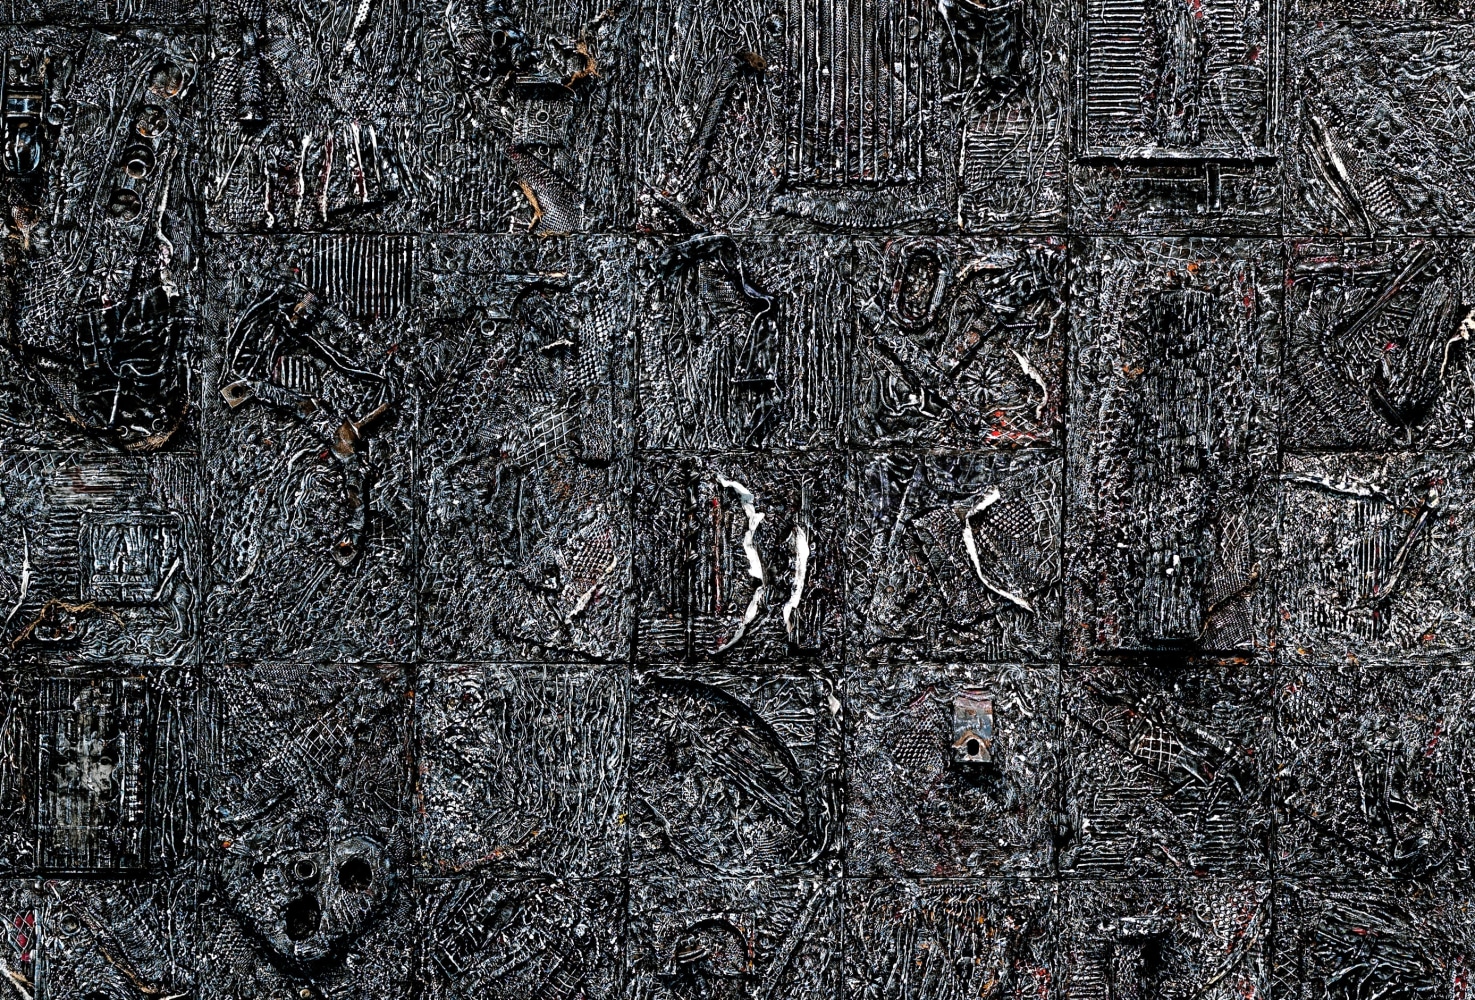 Close-up detail of black, textured artwork